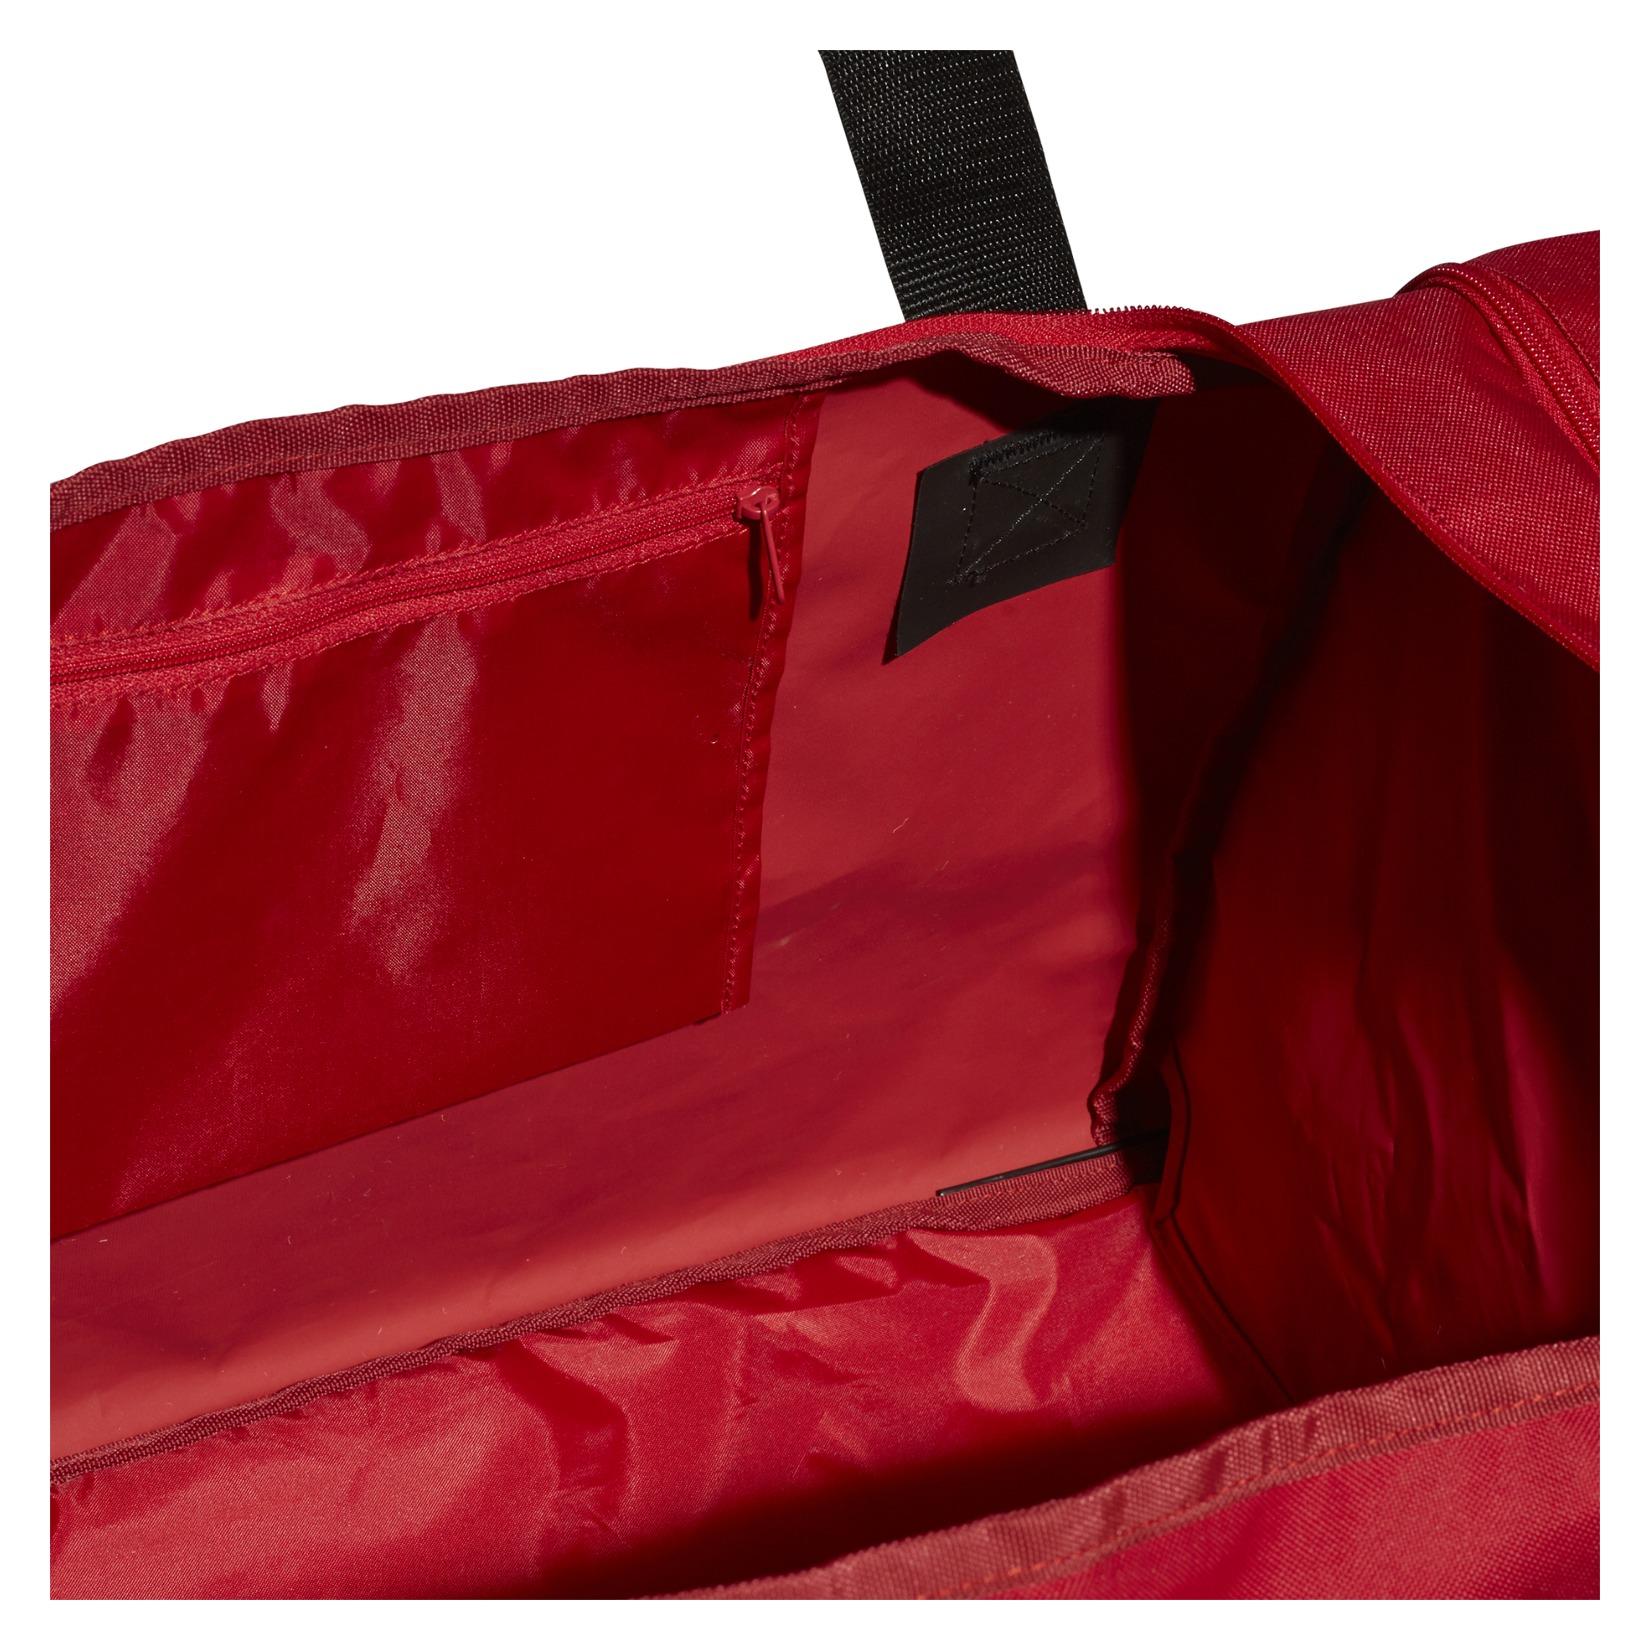 Adidas Tiro Duffel Bag Medium